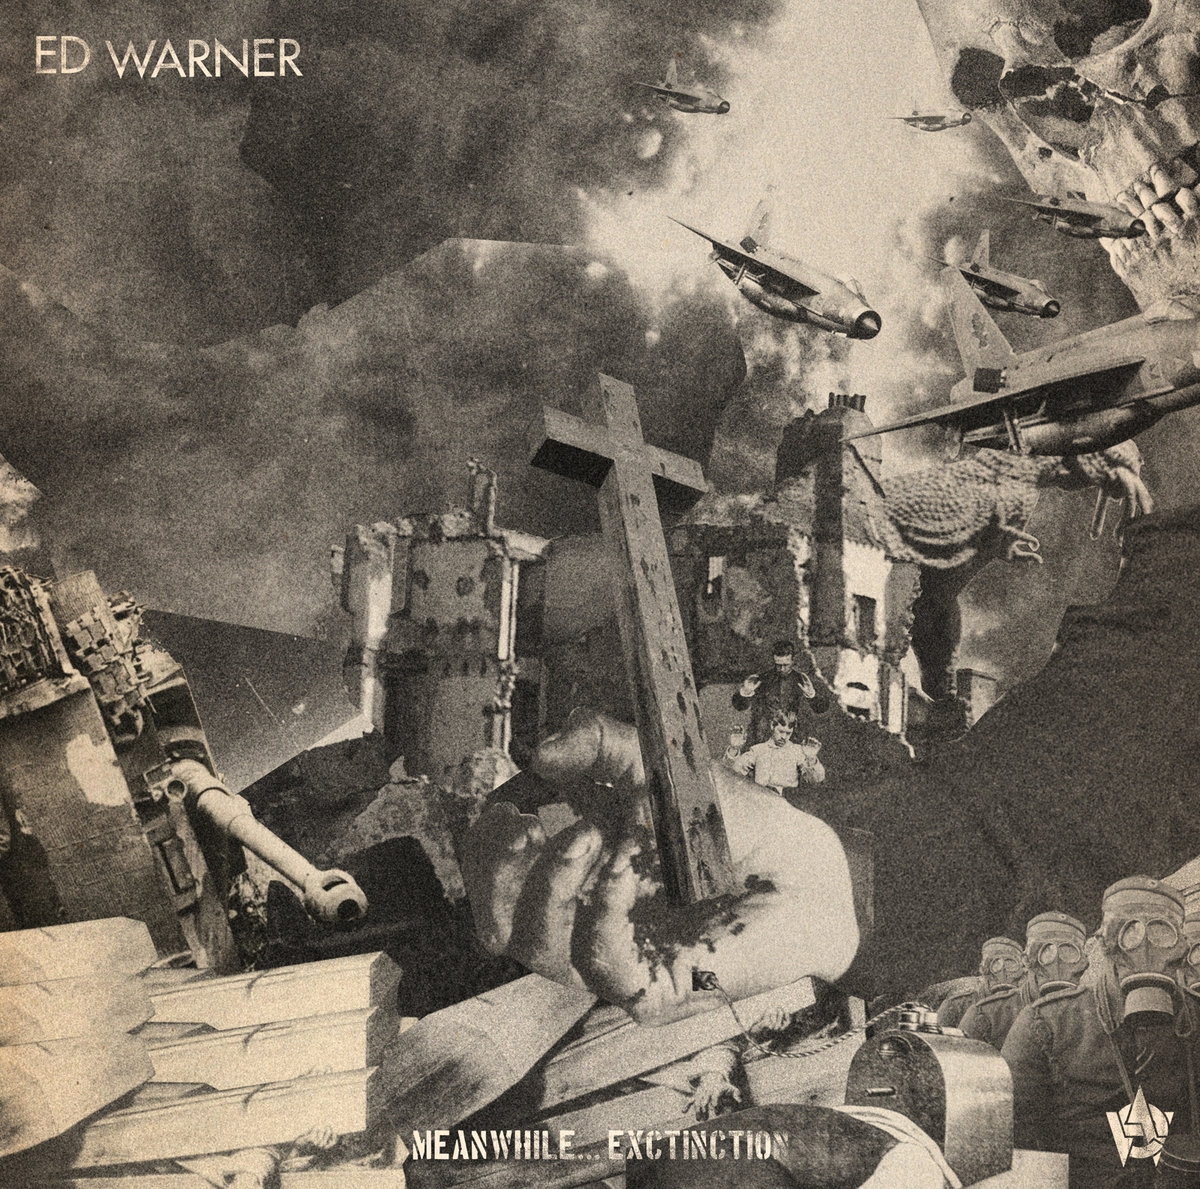 ED WARNER "Meanwhile...extinction" - LP